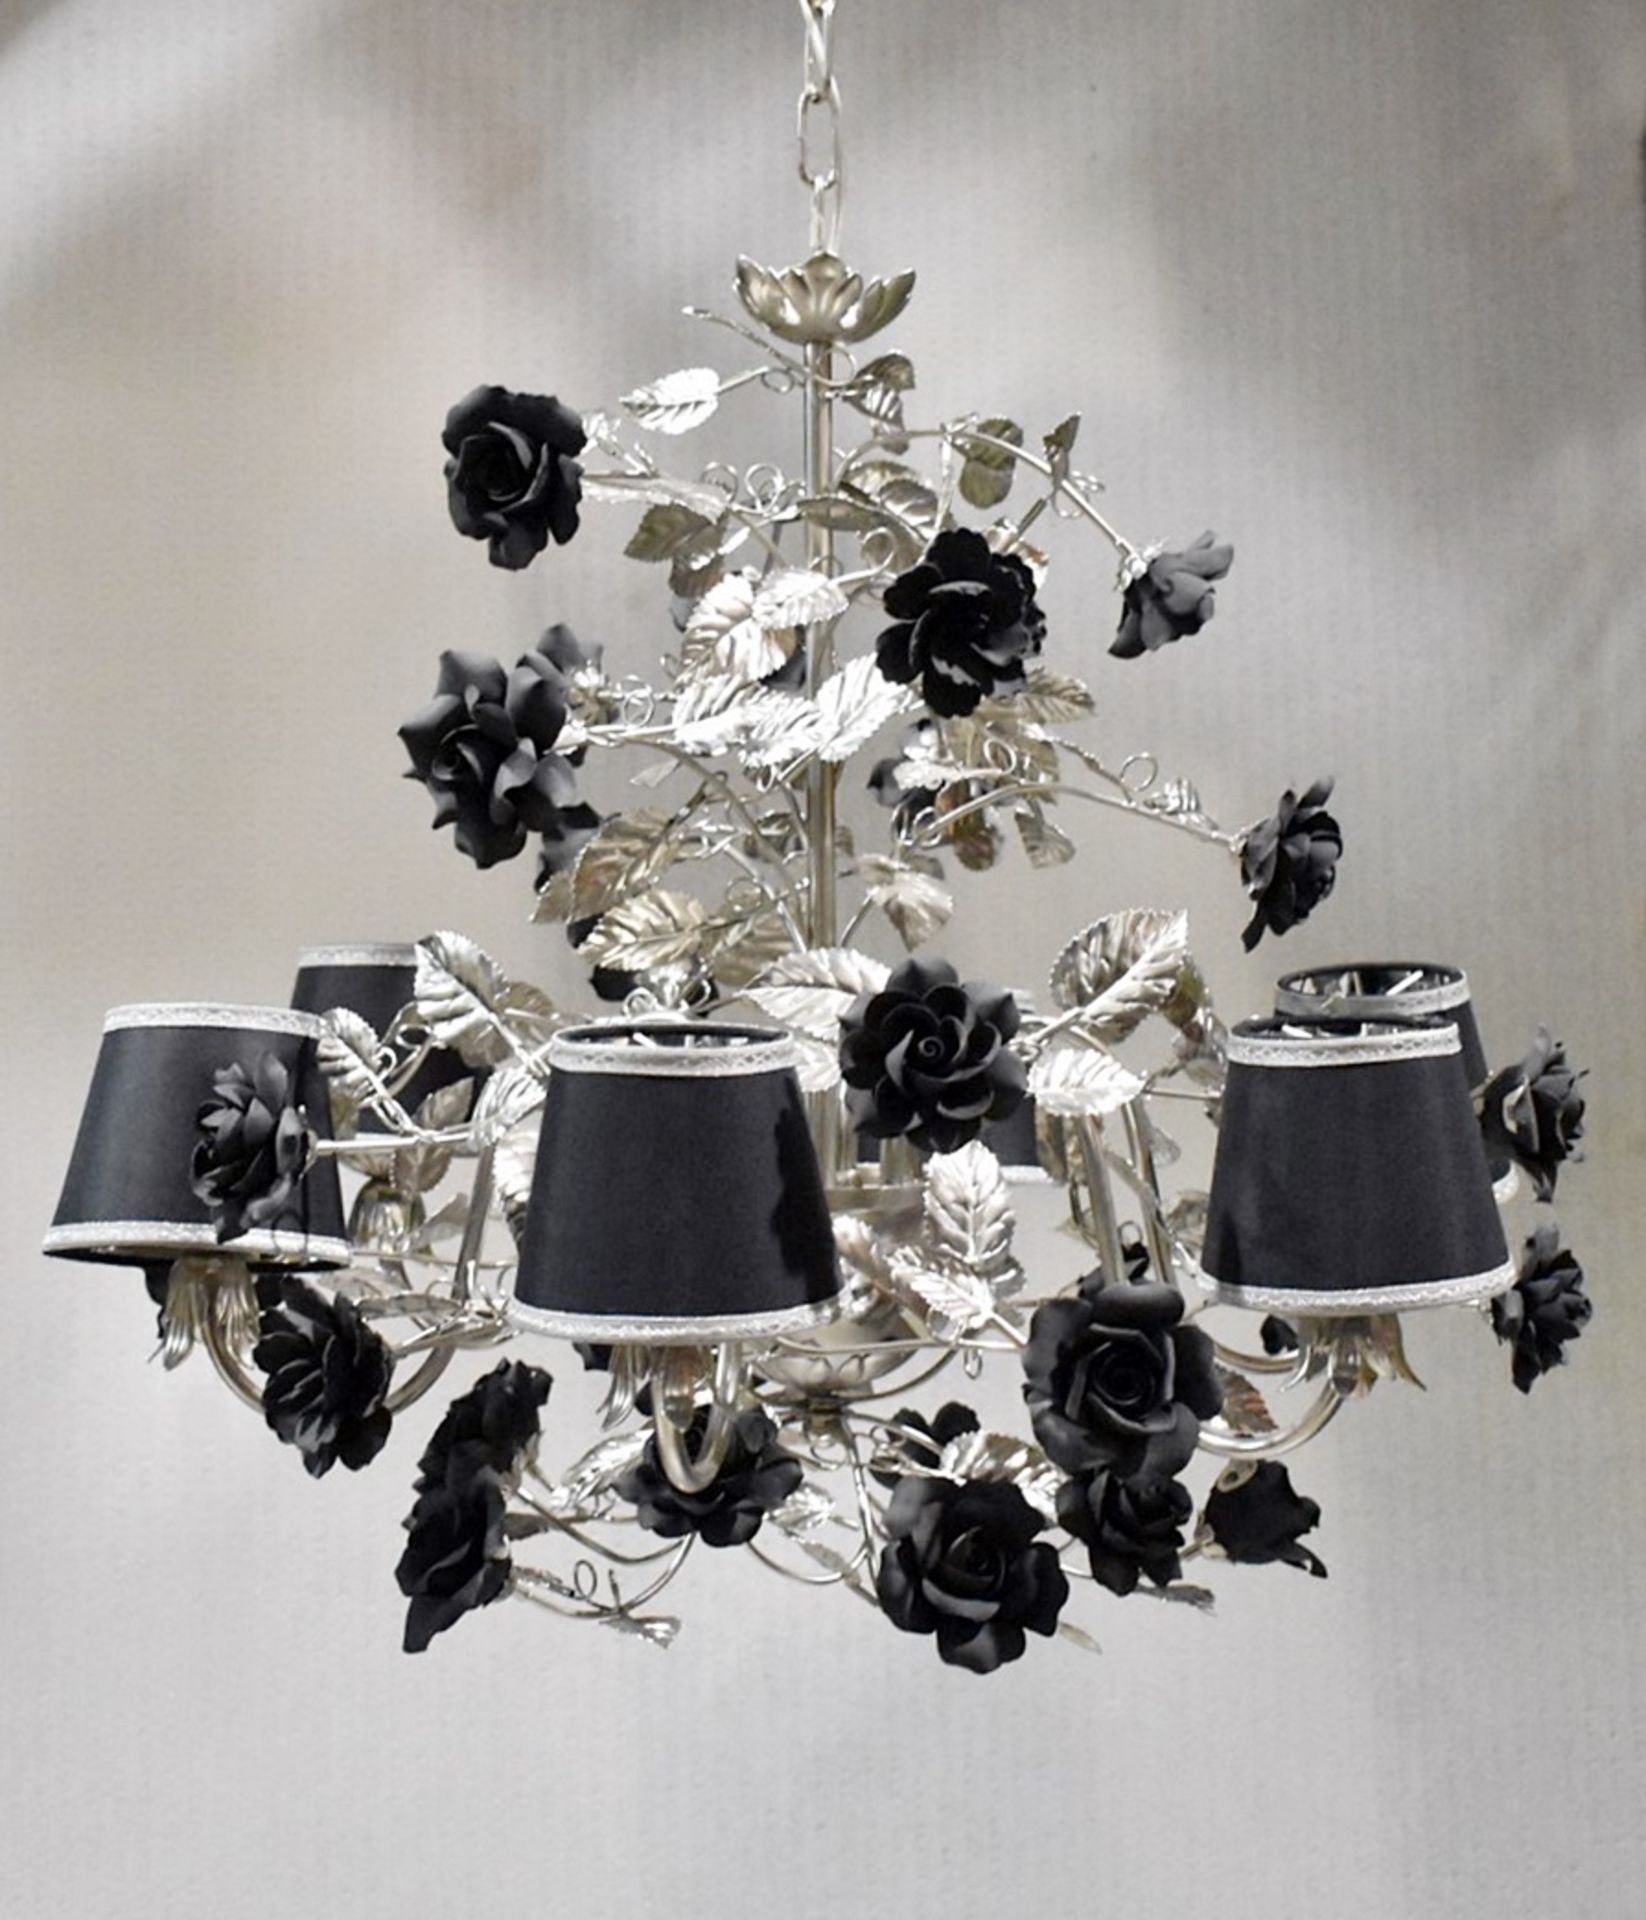 1 x VILLARI Opulent Platinum Plated 6-Arm Luxury Chandelier With Porcelain Decoration - RRP £12,000 - Image 8 of 17